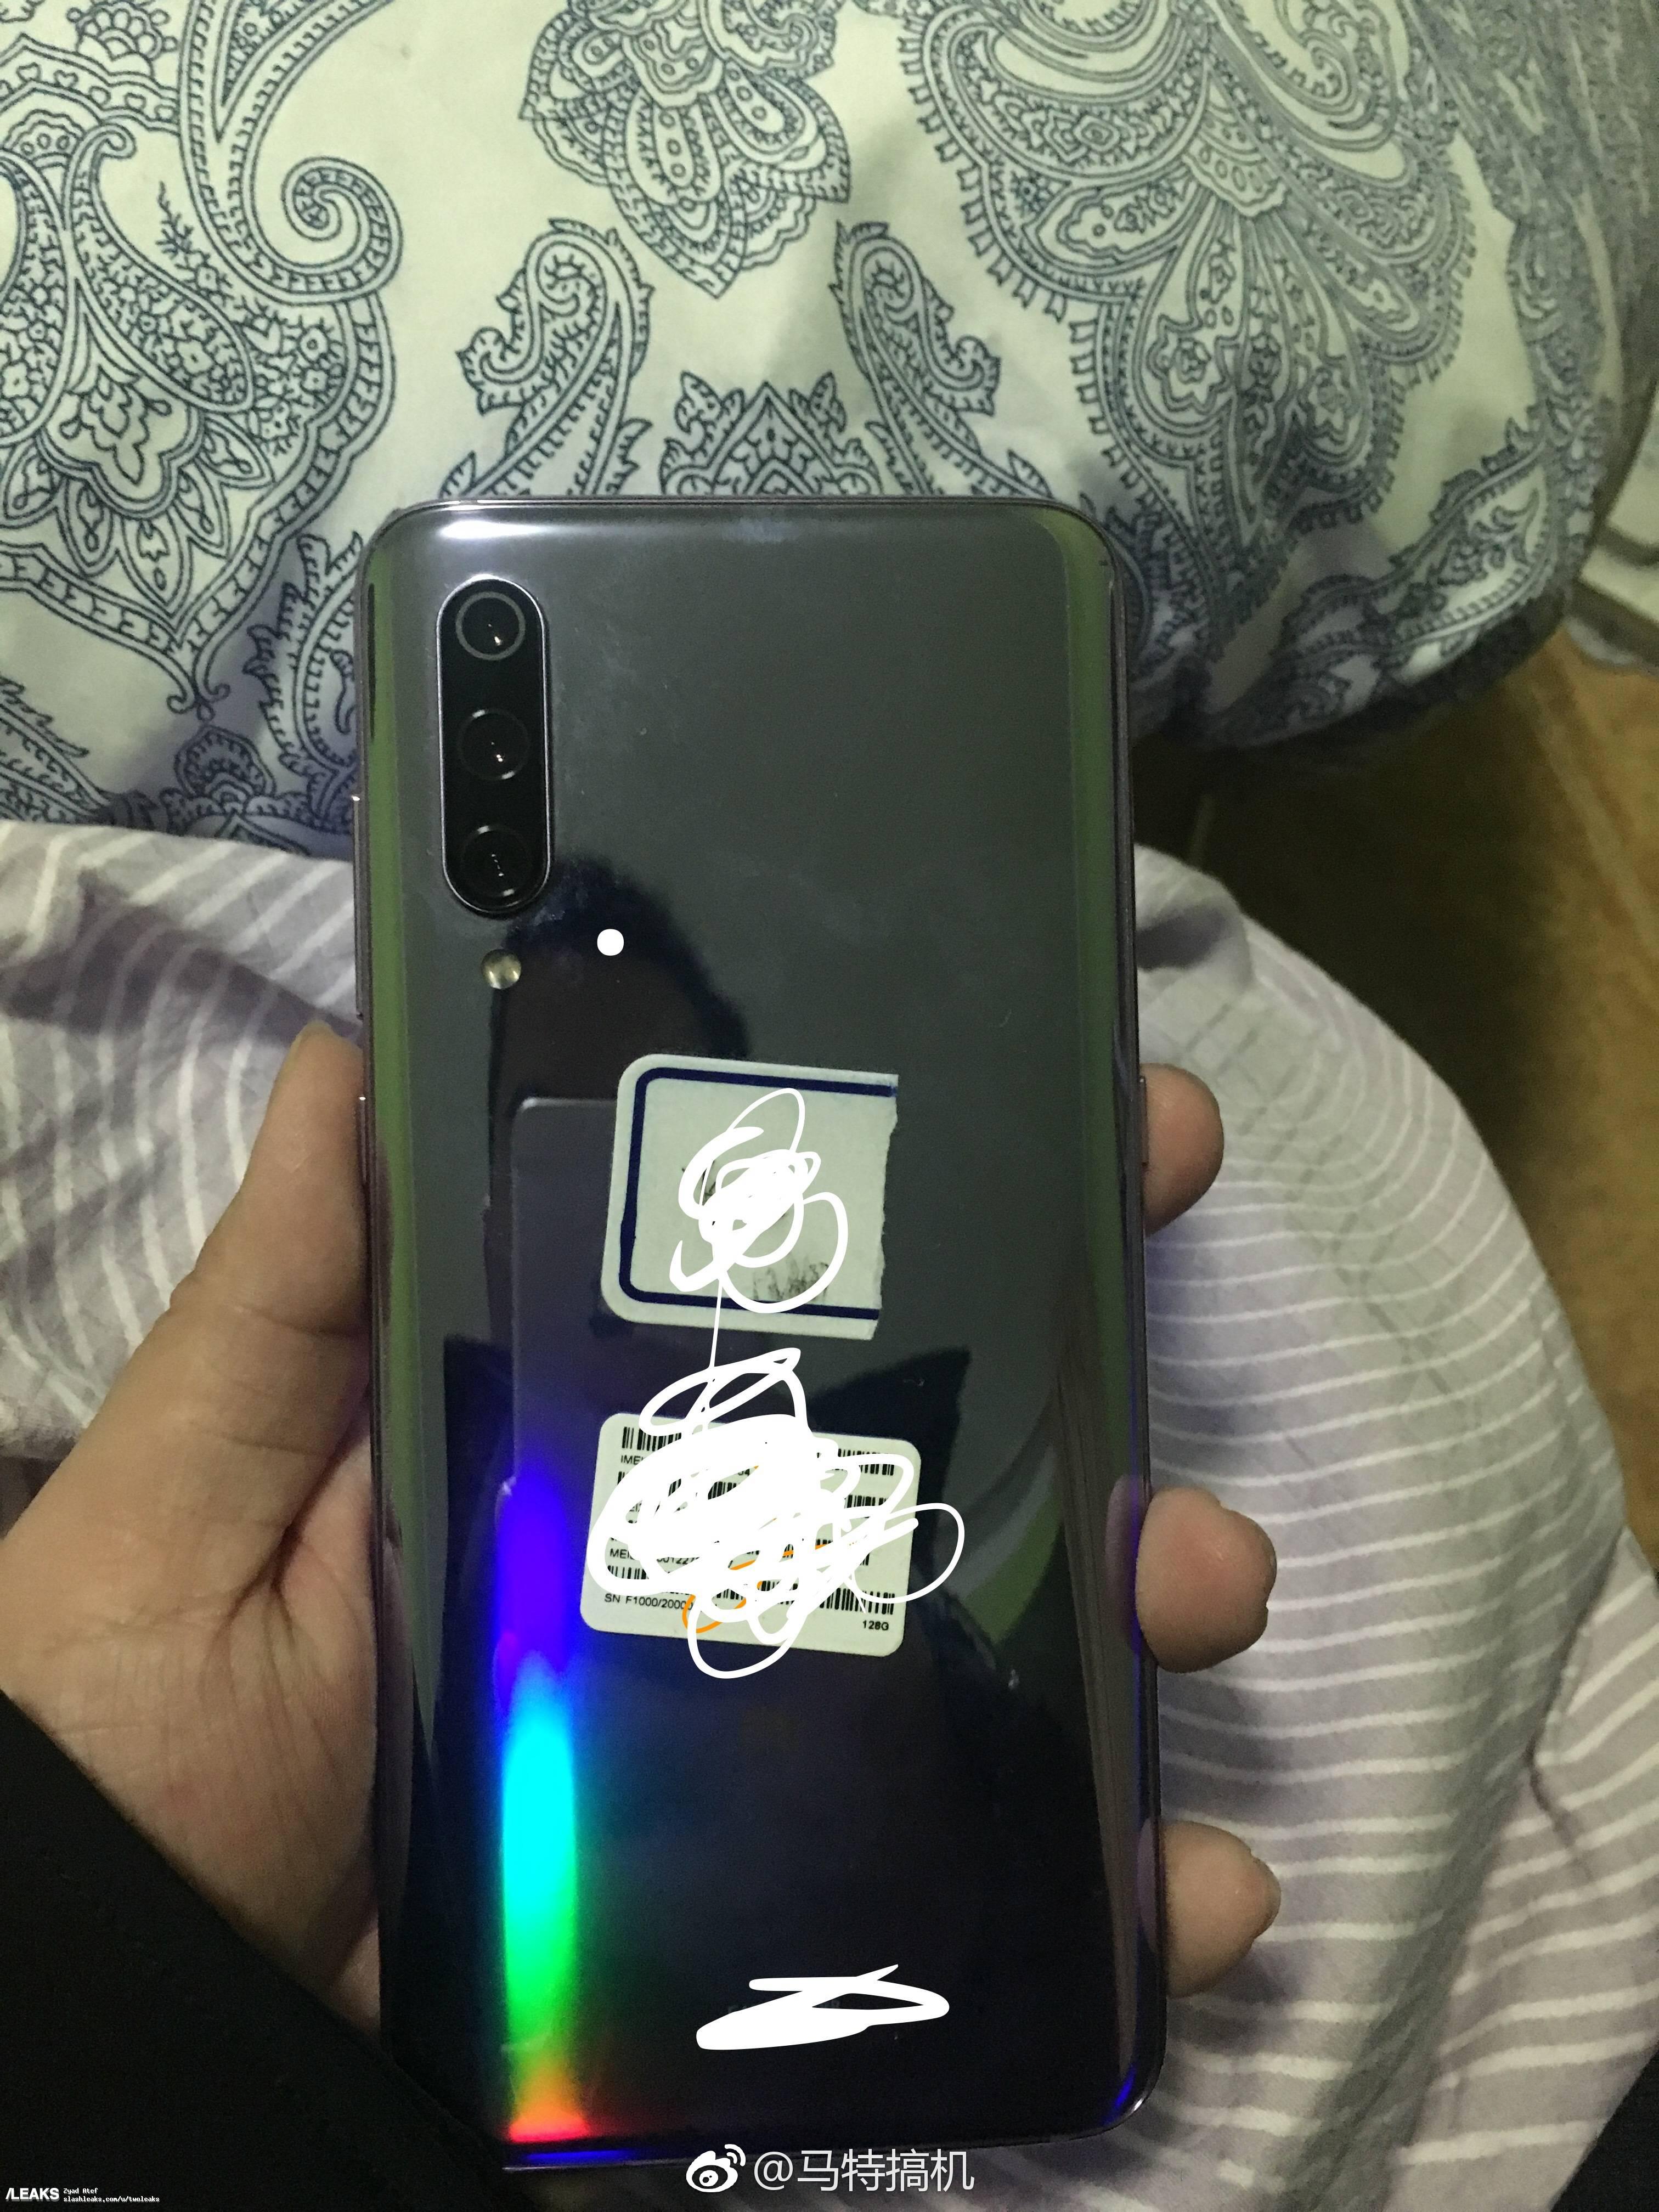 img Black Xiaomi Mi9 hands-on pics